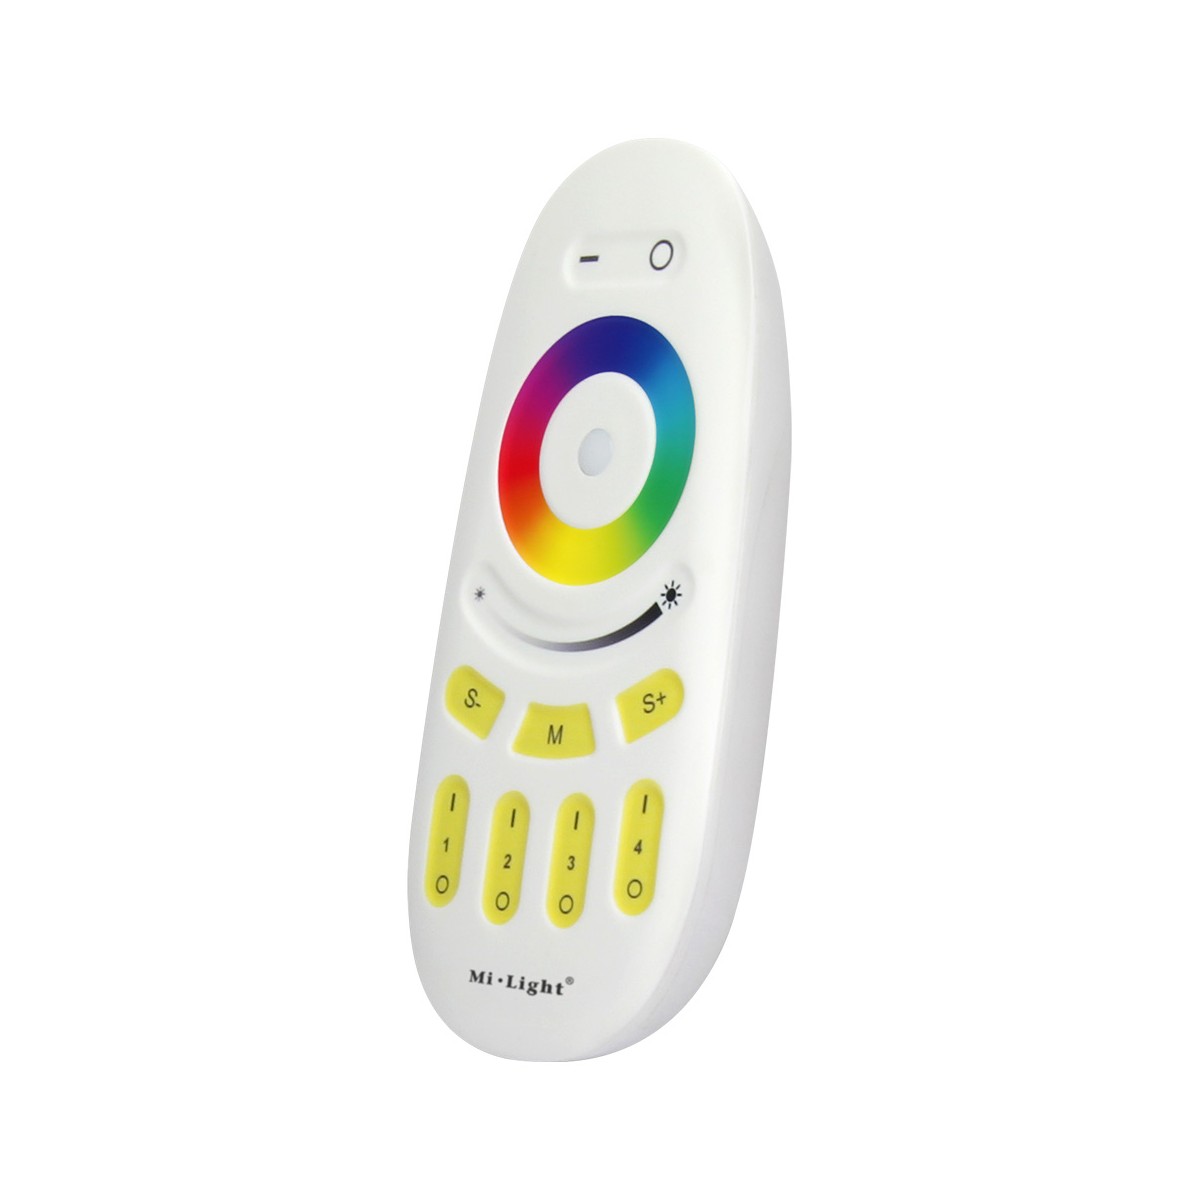 RGBW LED remote control - 4 Zones - WHITE - FUT096 - Mi Light